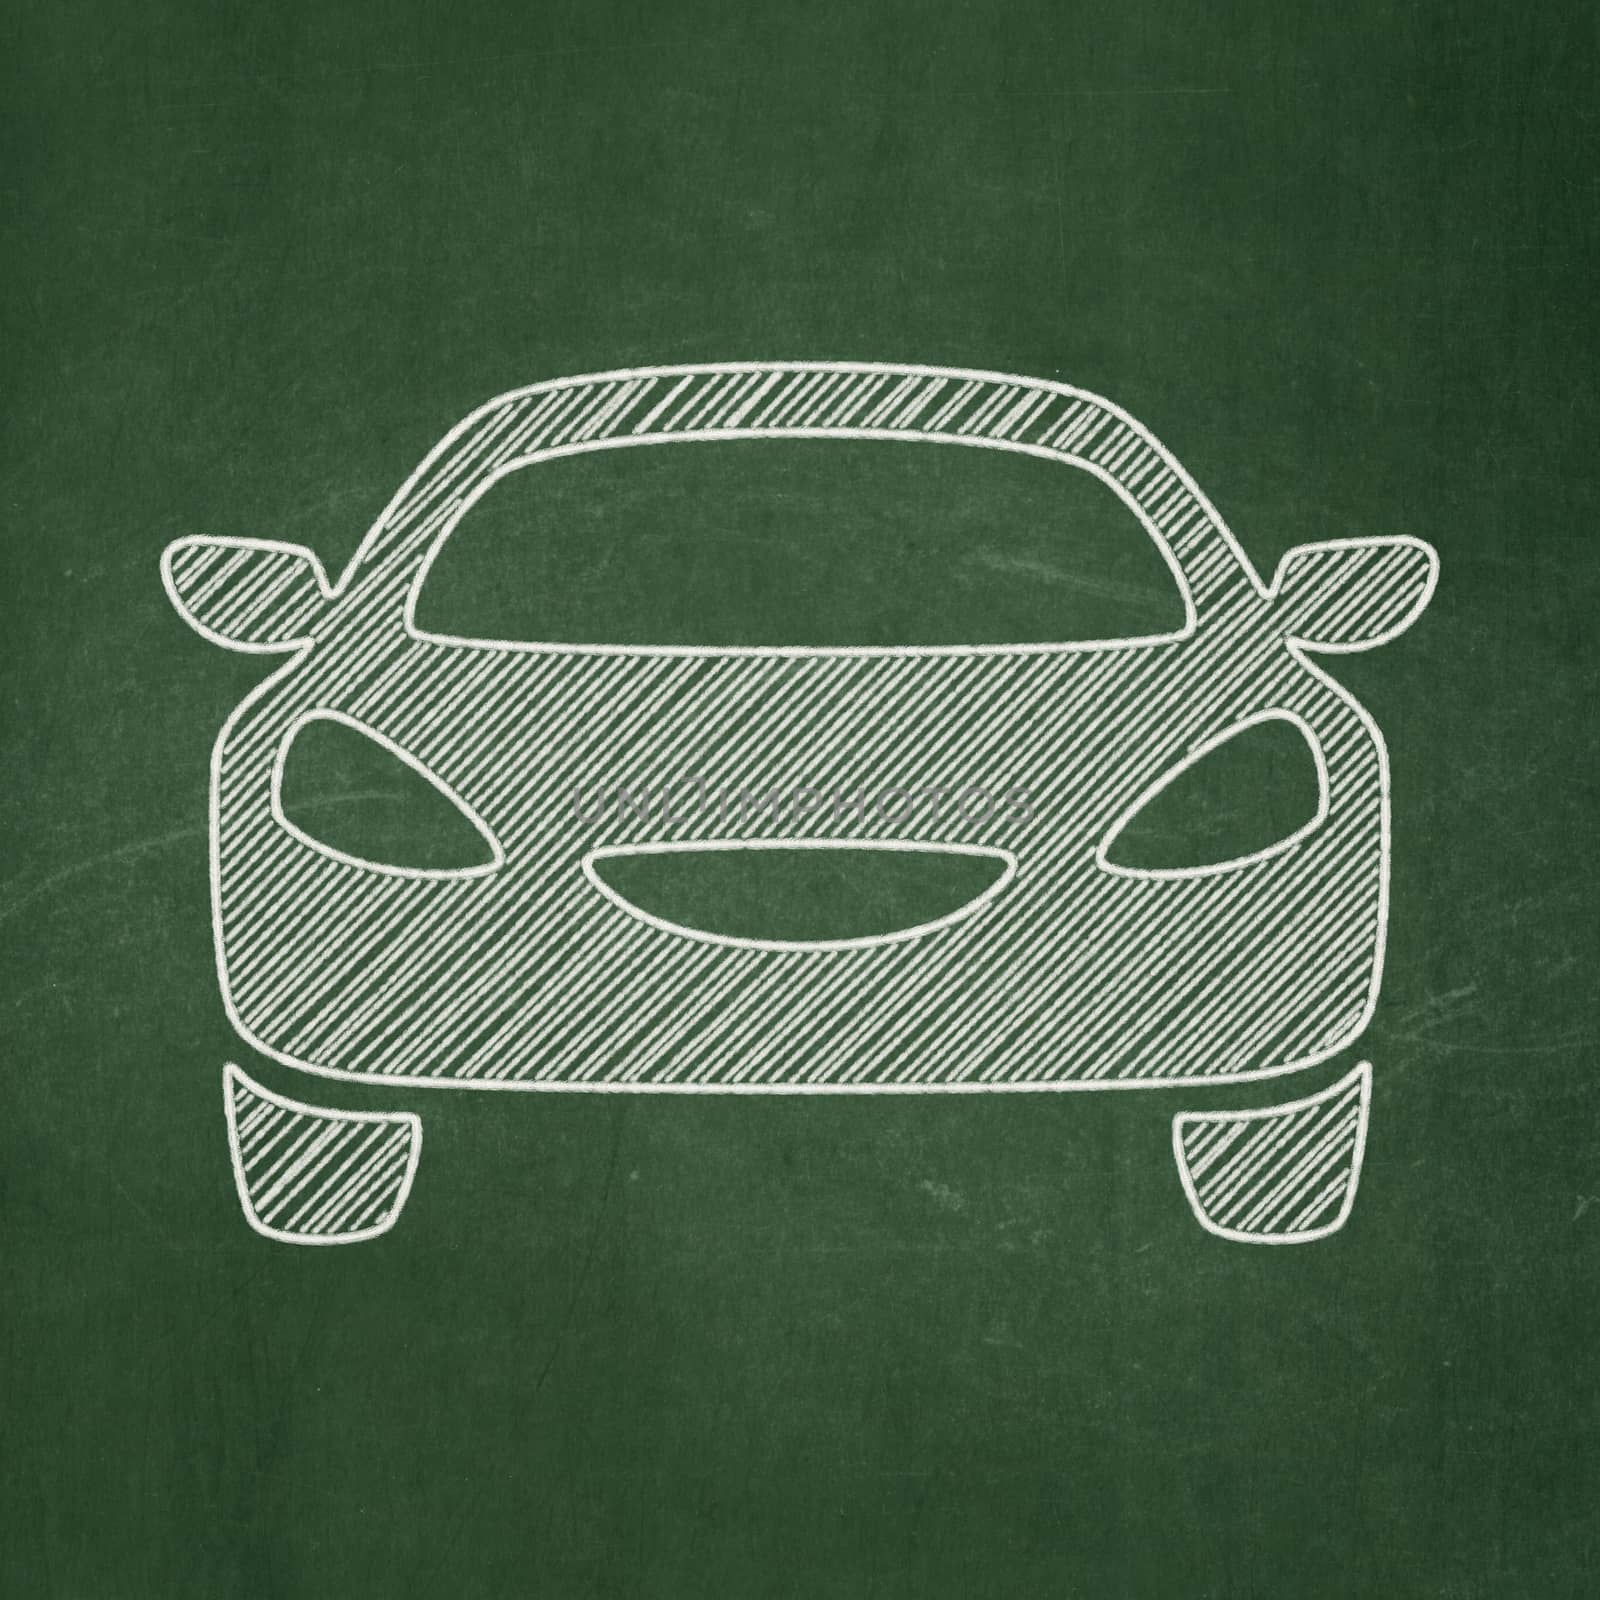 Travel concept: Car on chalkboard background by maxkabakov